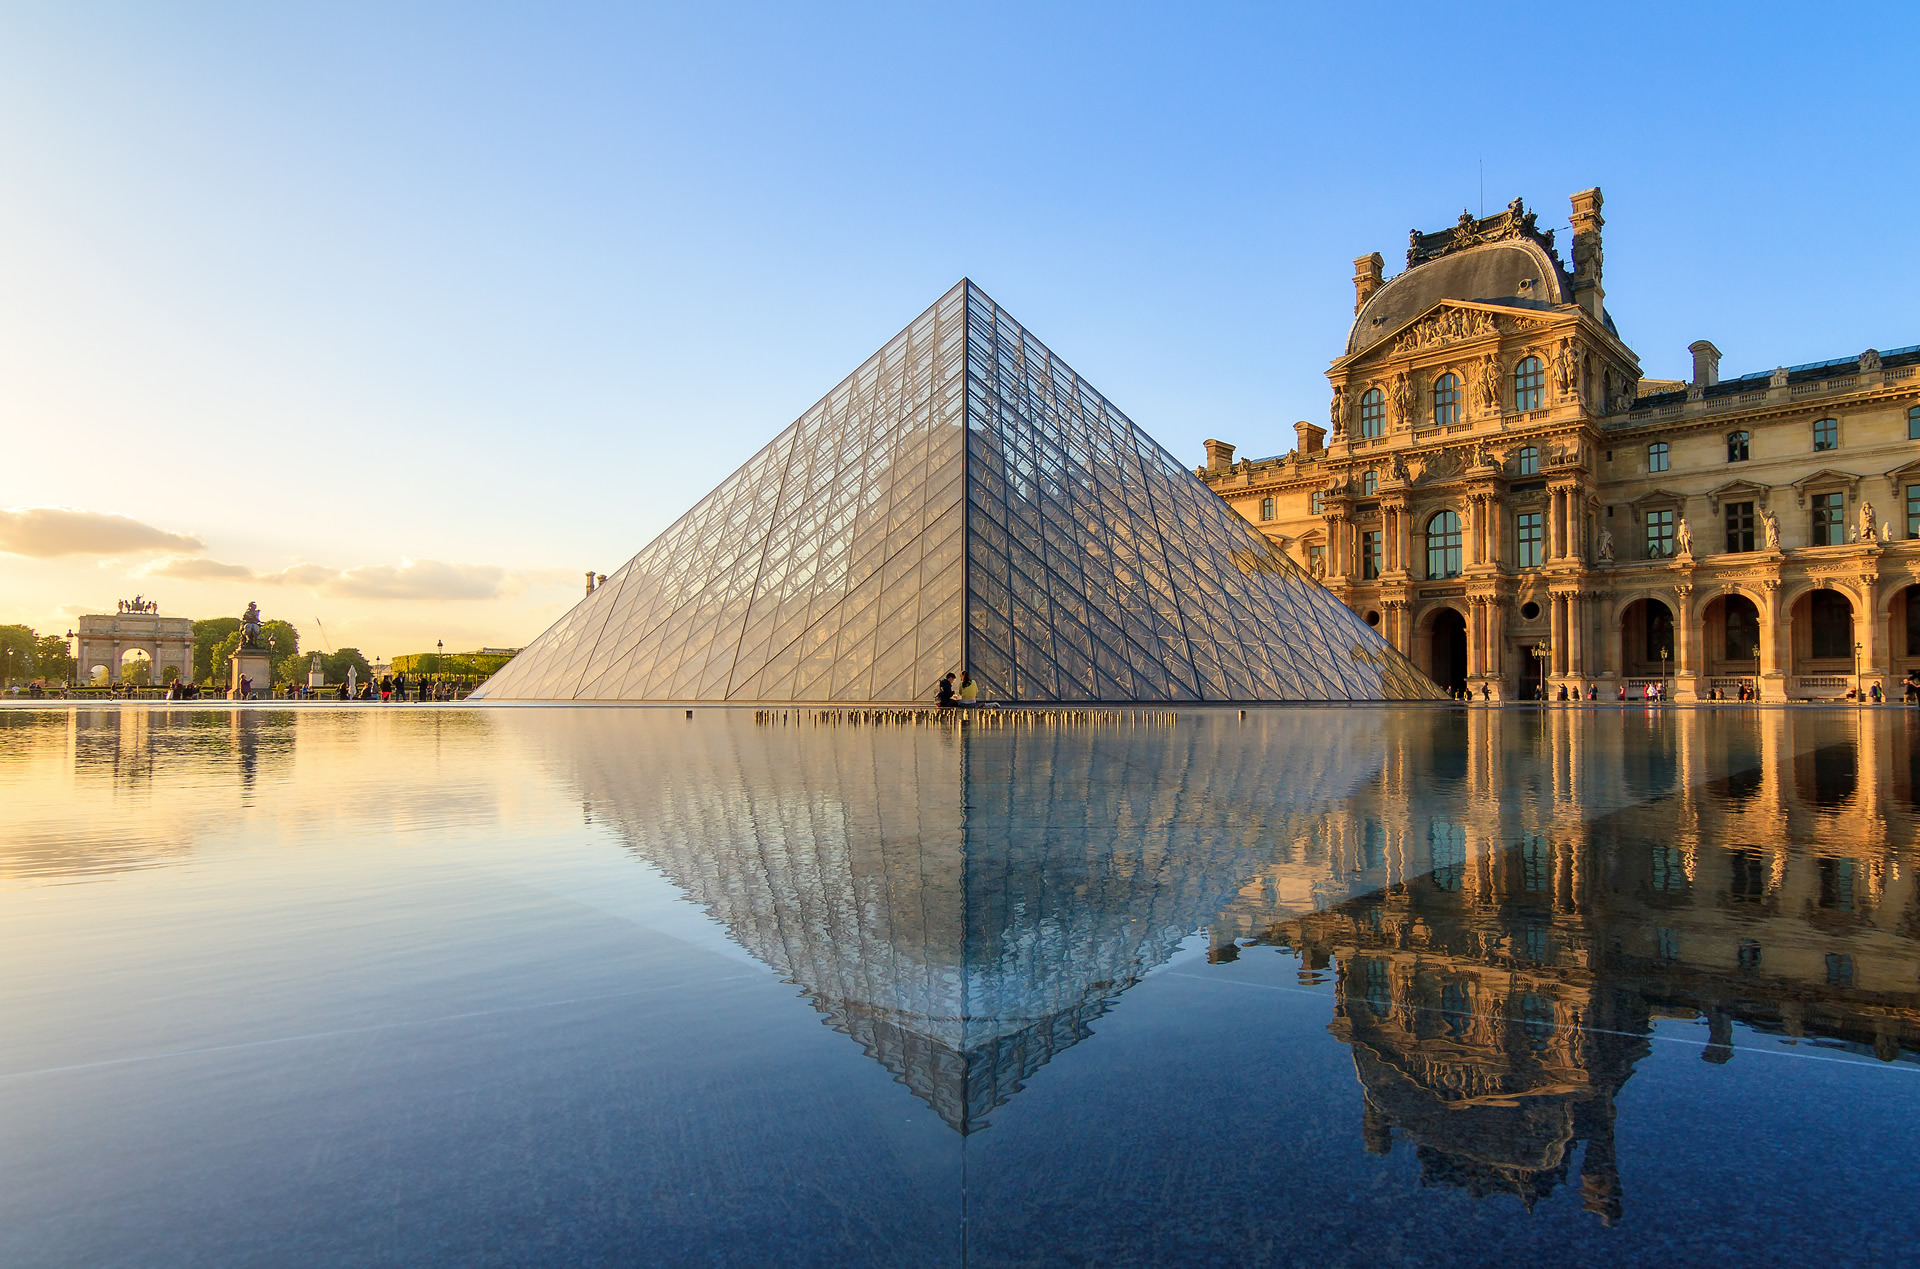 Louvre Museum paris